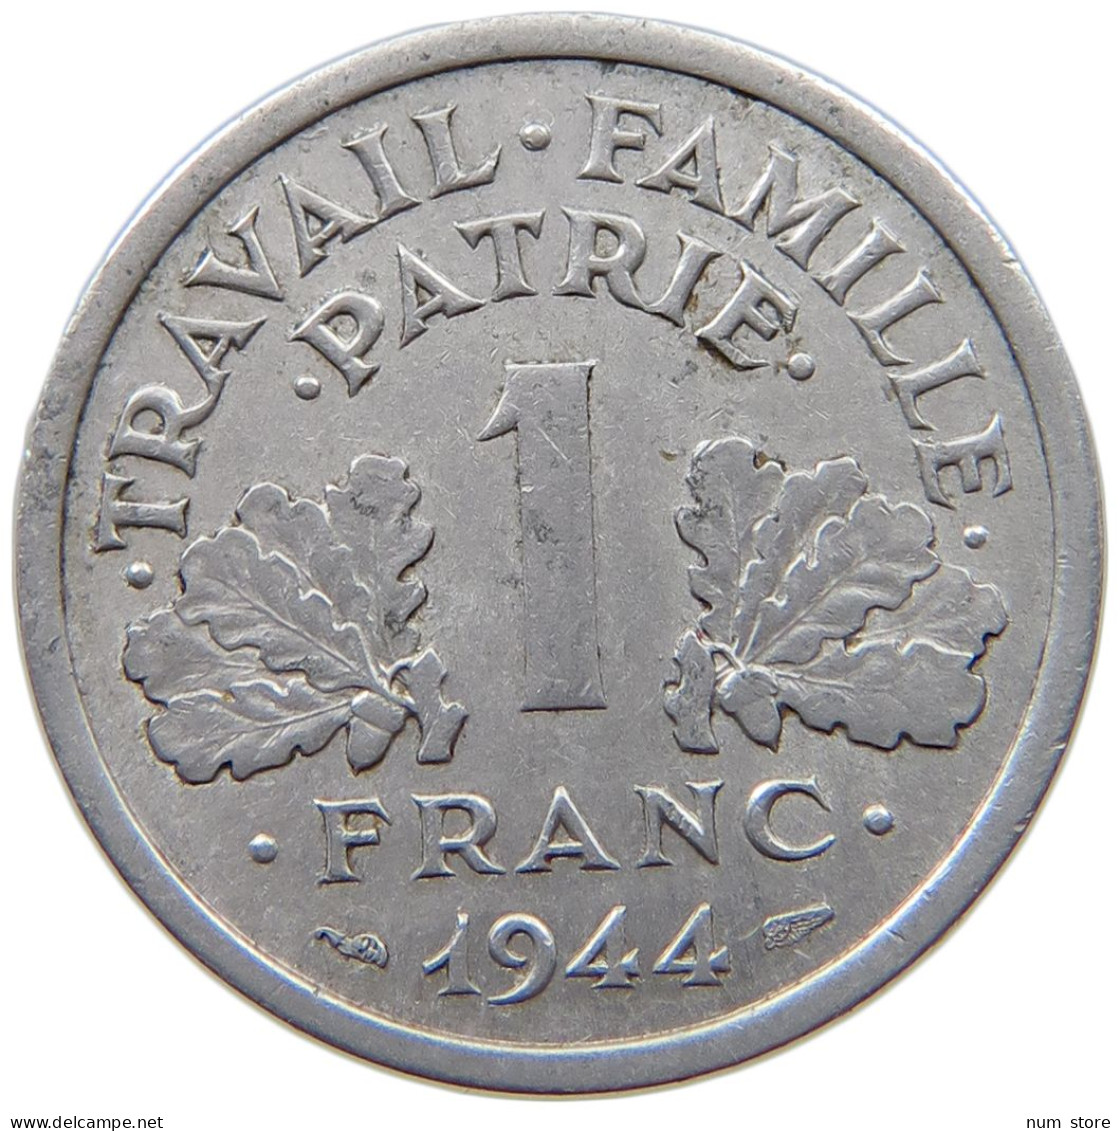 FRANCE 1 FRANC 1944 C #a021 0975 - 1 Franc